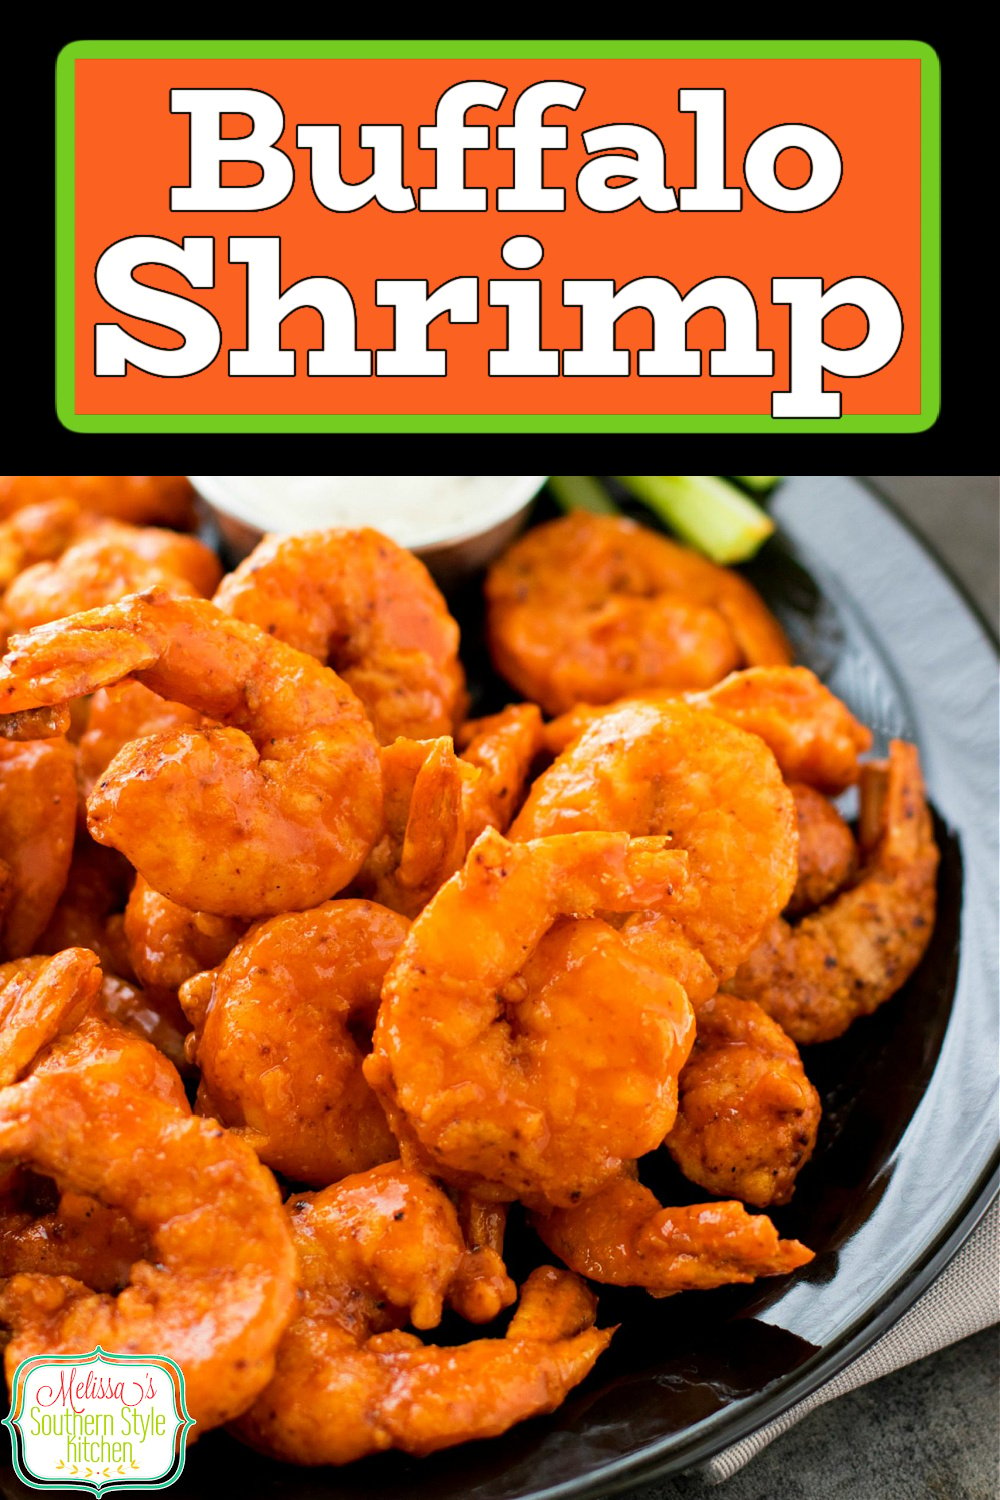 These fiery Buffalo Shrimp will bring the heat to your appetizer and dinner menu #buffaloshrimp #shrimprecipes #seafood #appetizers #buffalosauce #dinnerideas #dinner #food #recipes #seafoodrecipes #shrimp #southernfood #southernrecipes via @melissasssk